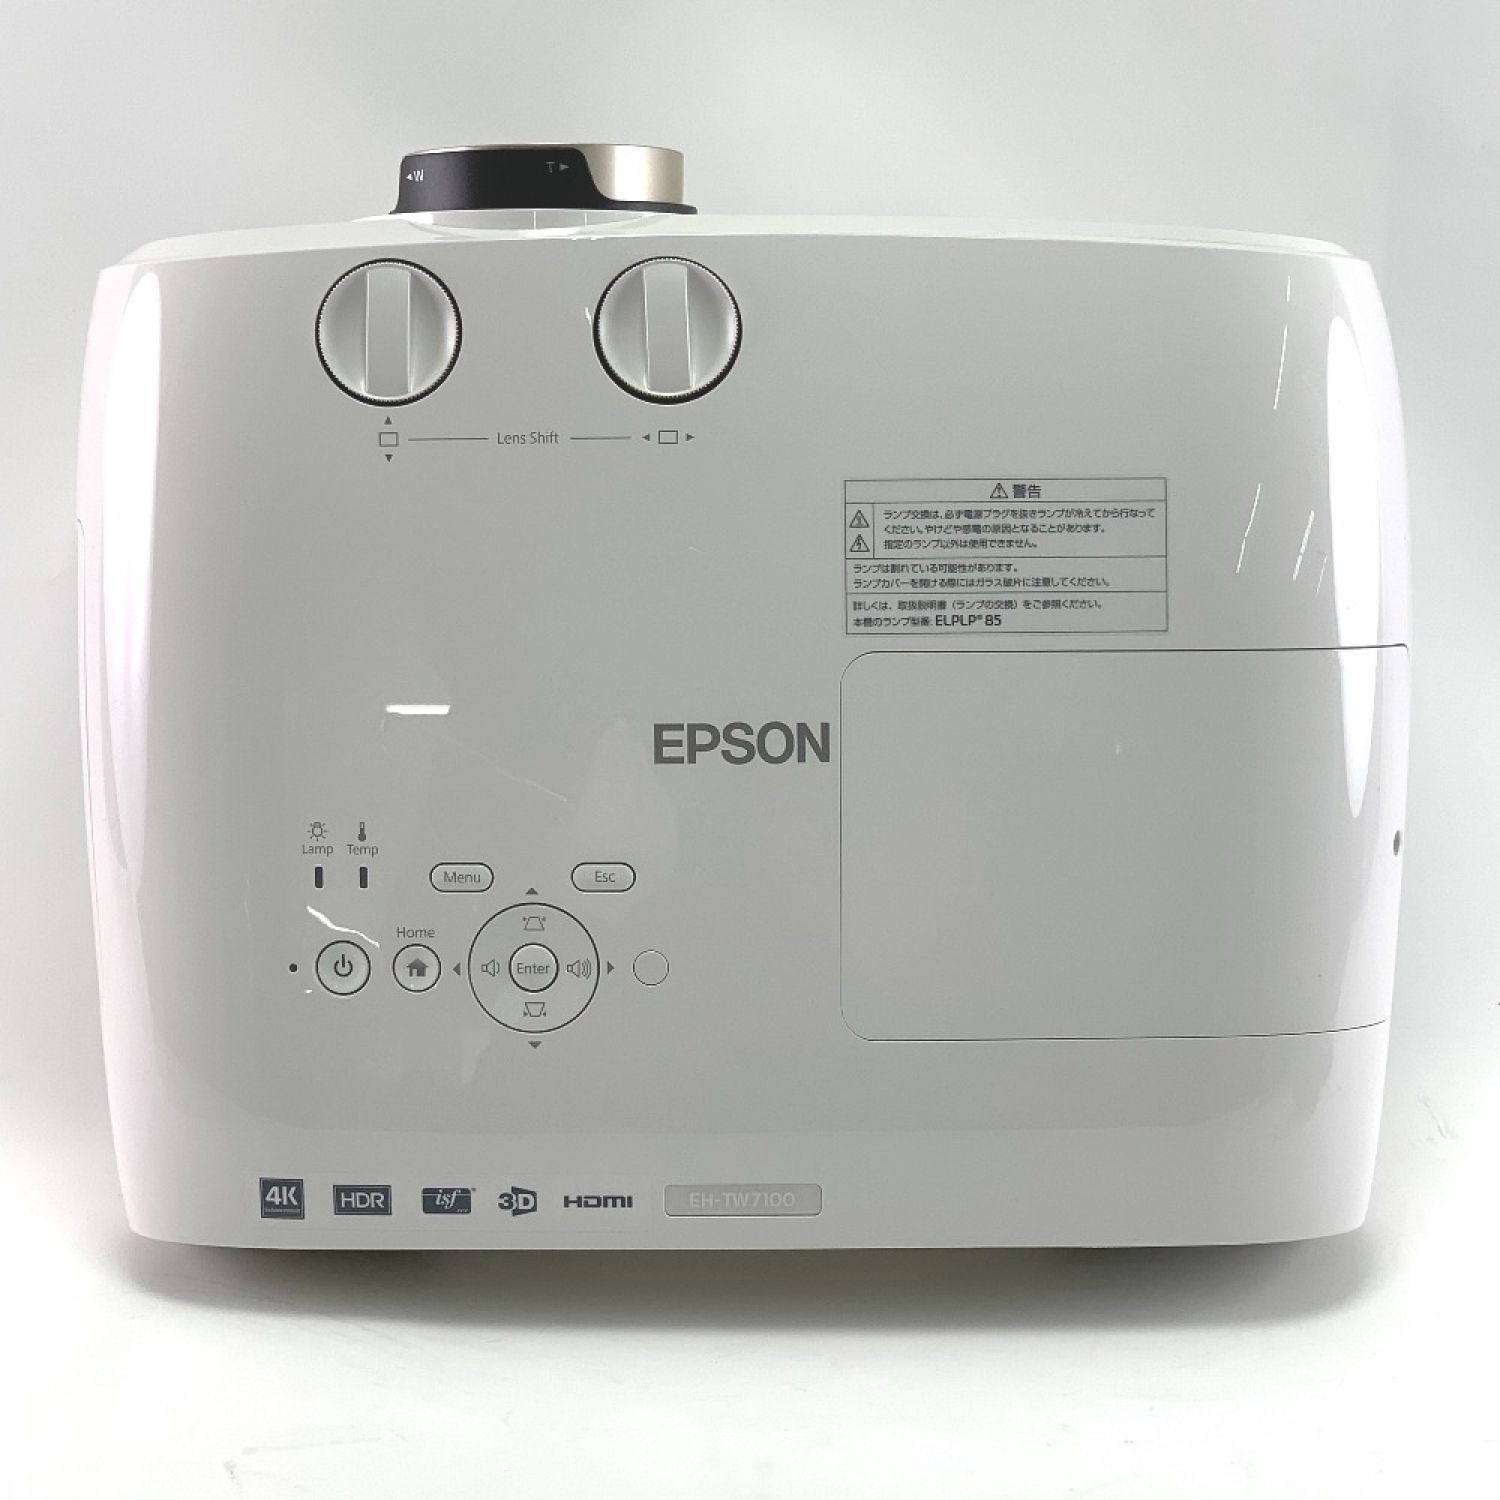 EPSON dreamio ホームプロジェクター EH-TW7100 (100000:1 3000lm) 4K HDR対応 3D・Bluetooth対応  スピーカー内蔵モデル 通販